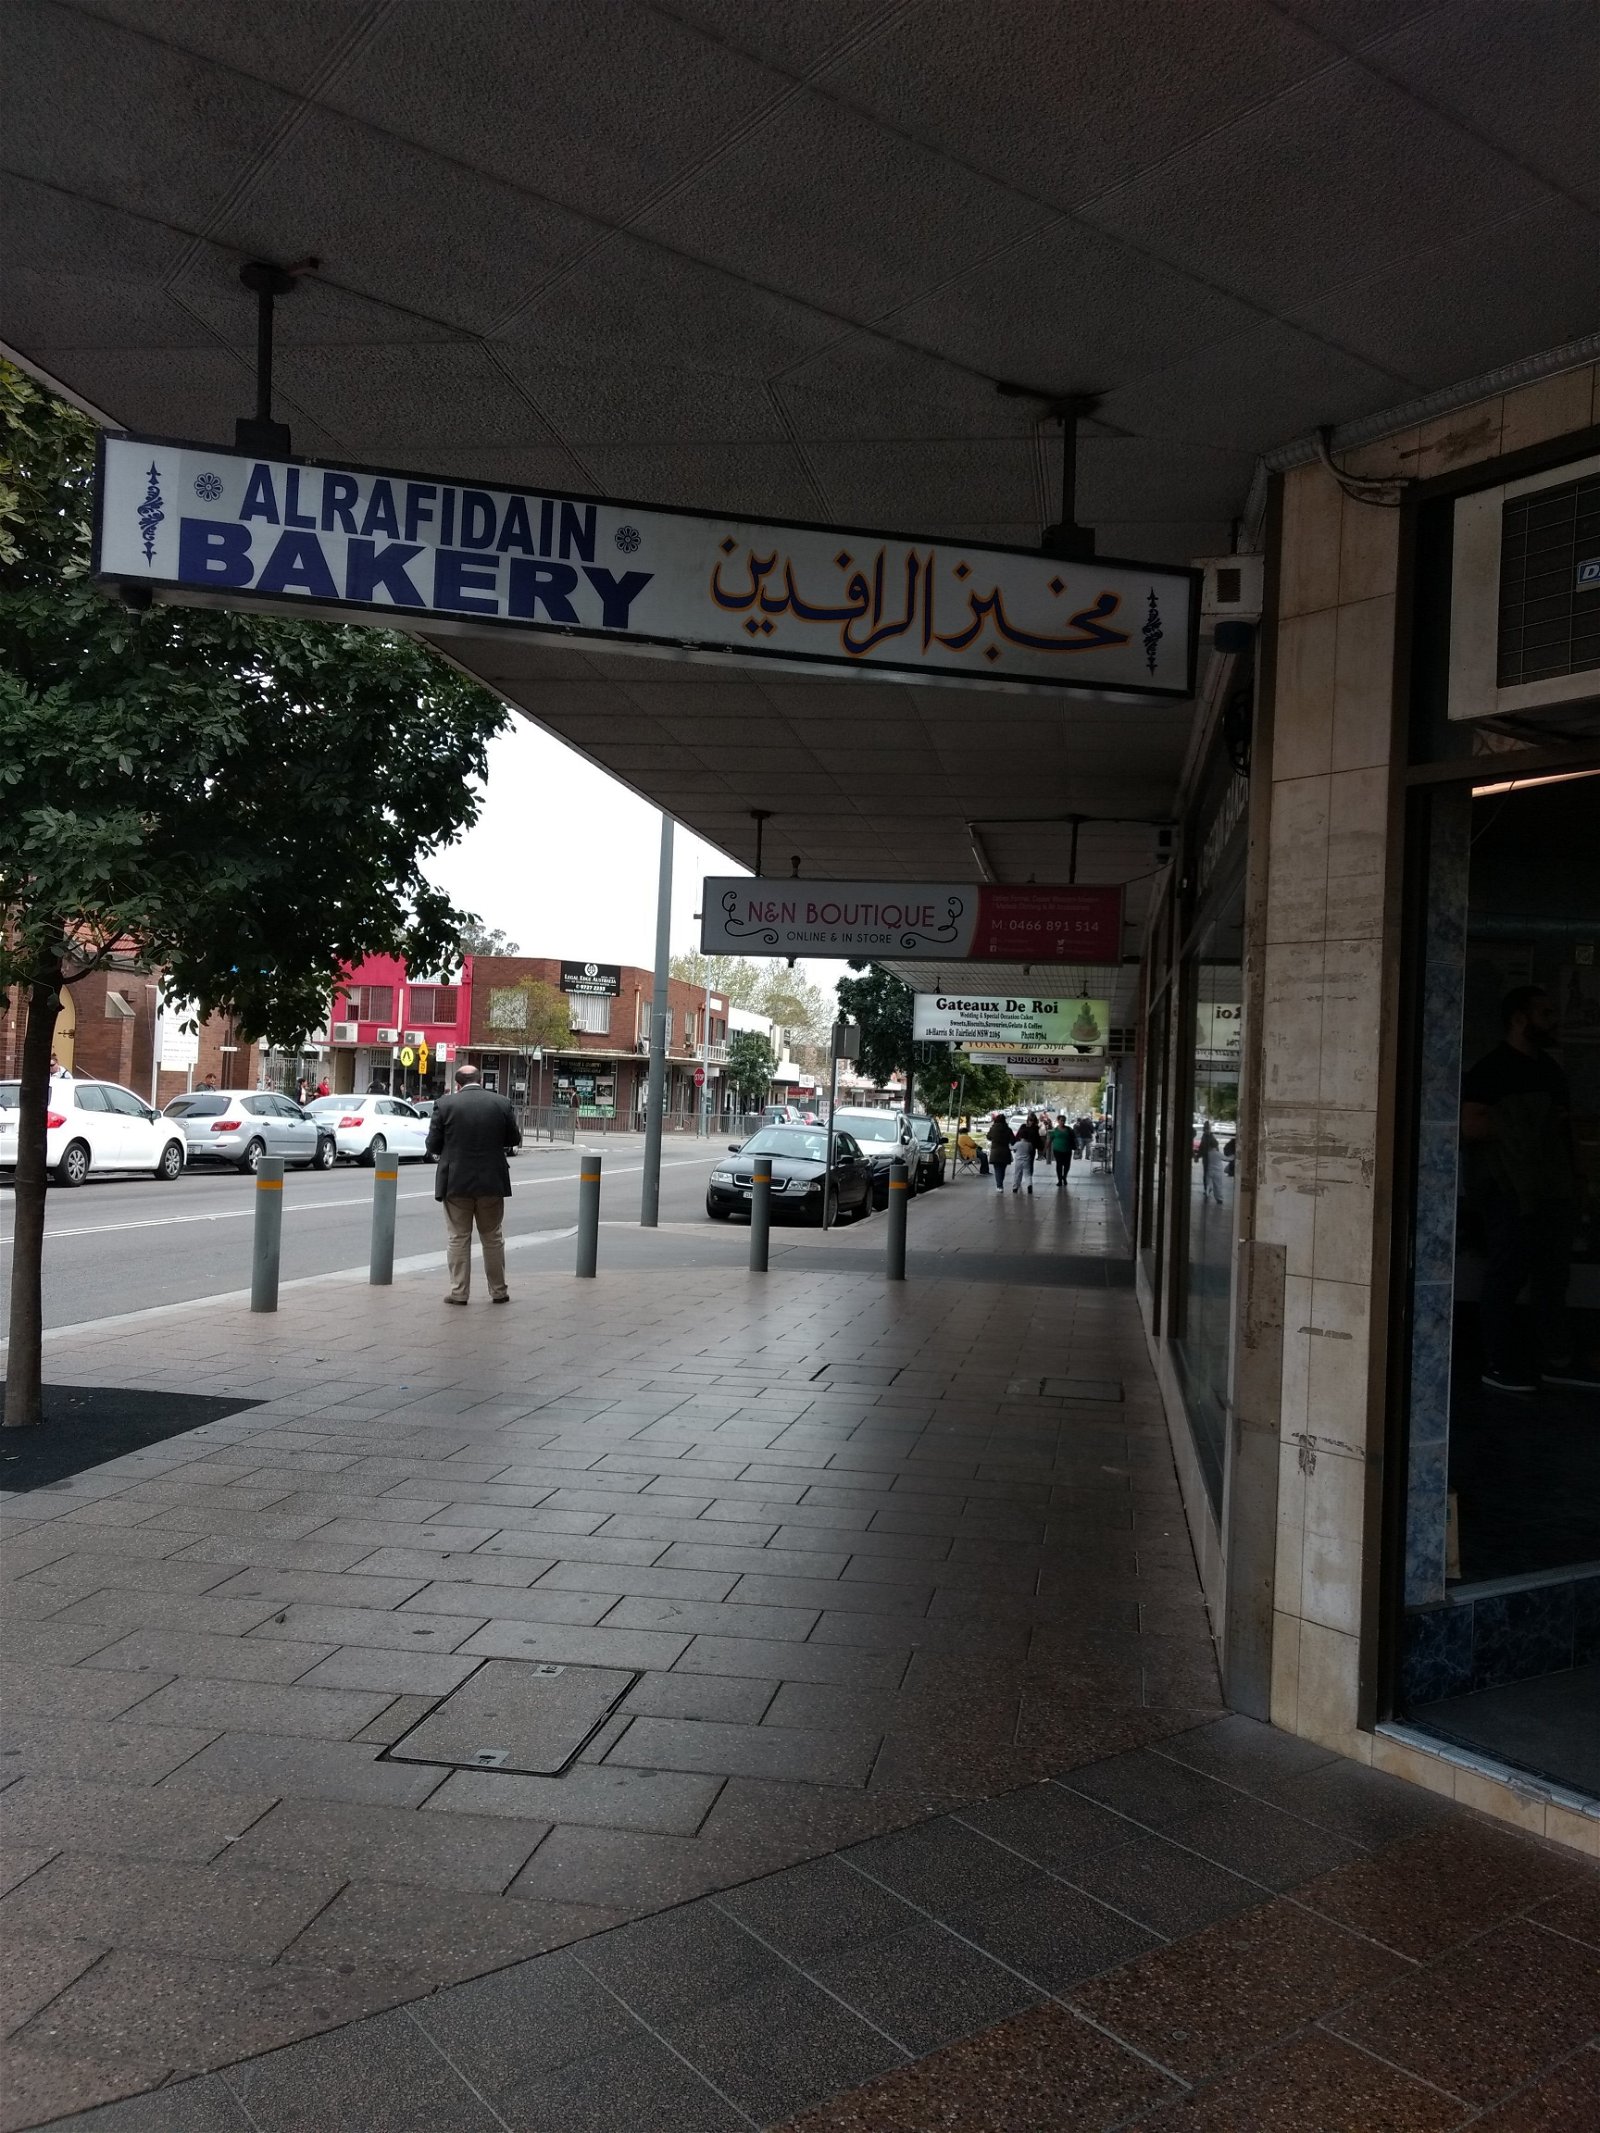 Al Rafidain bakery